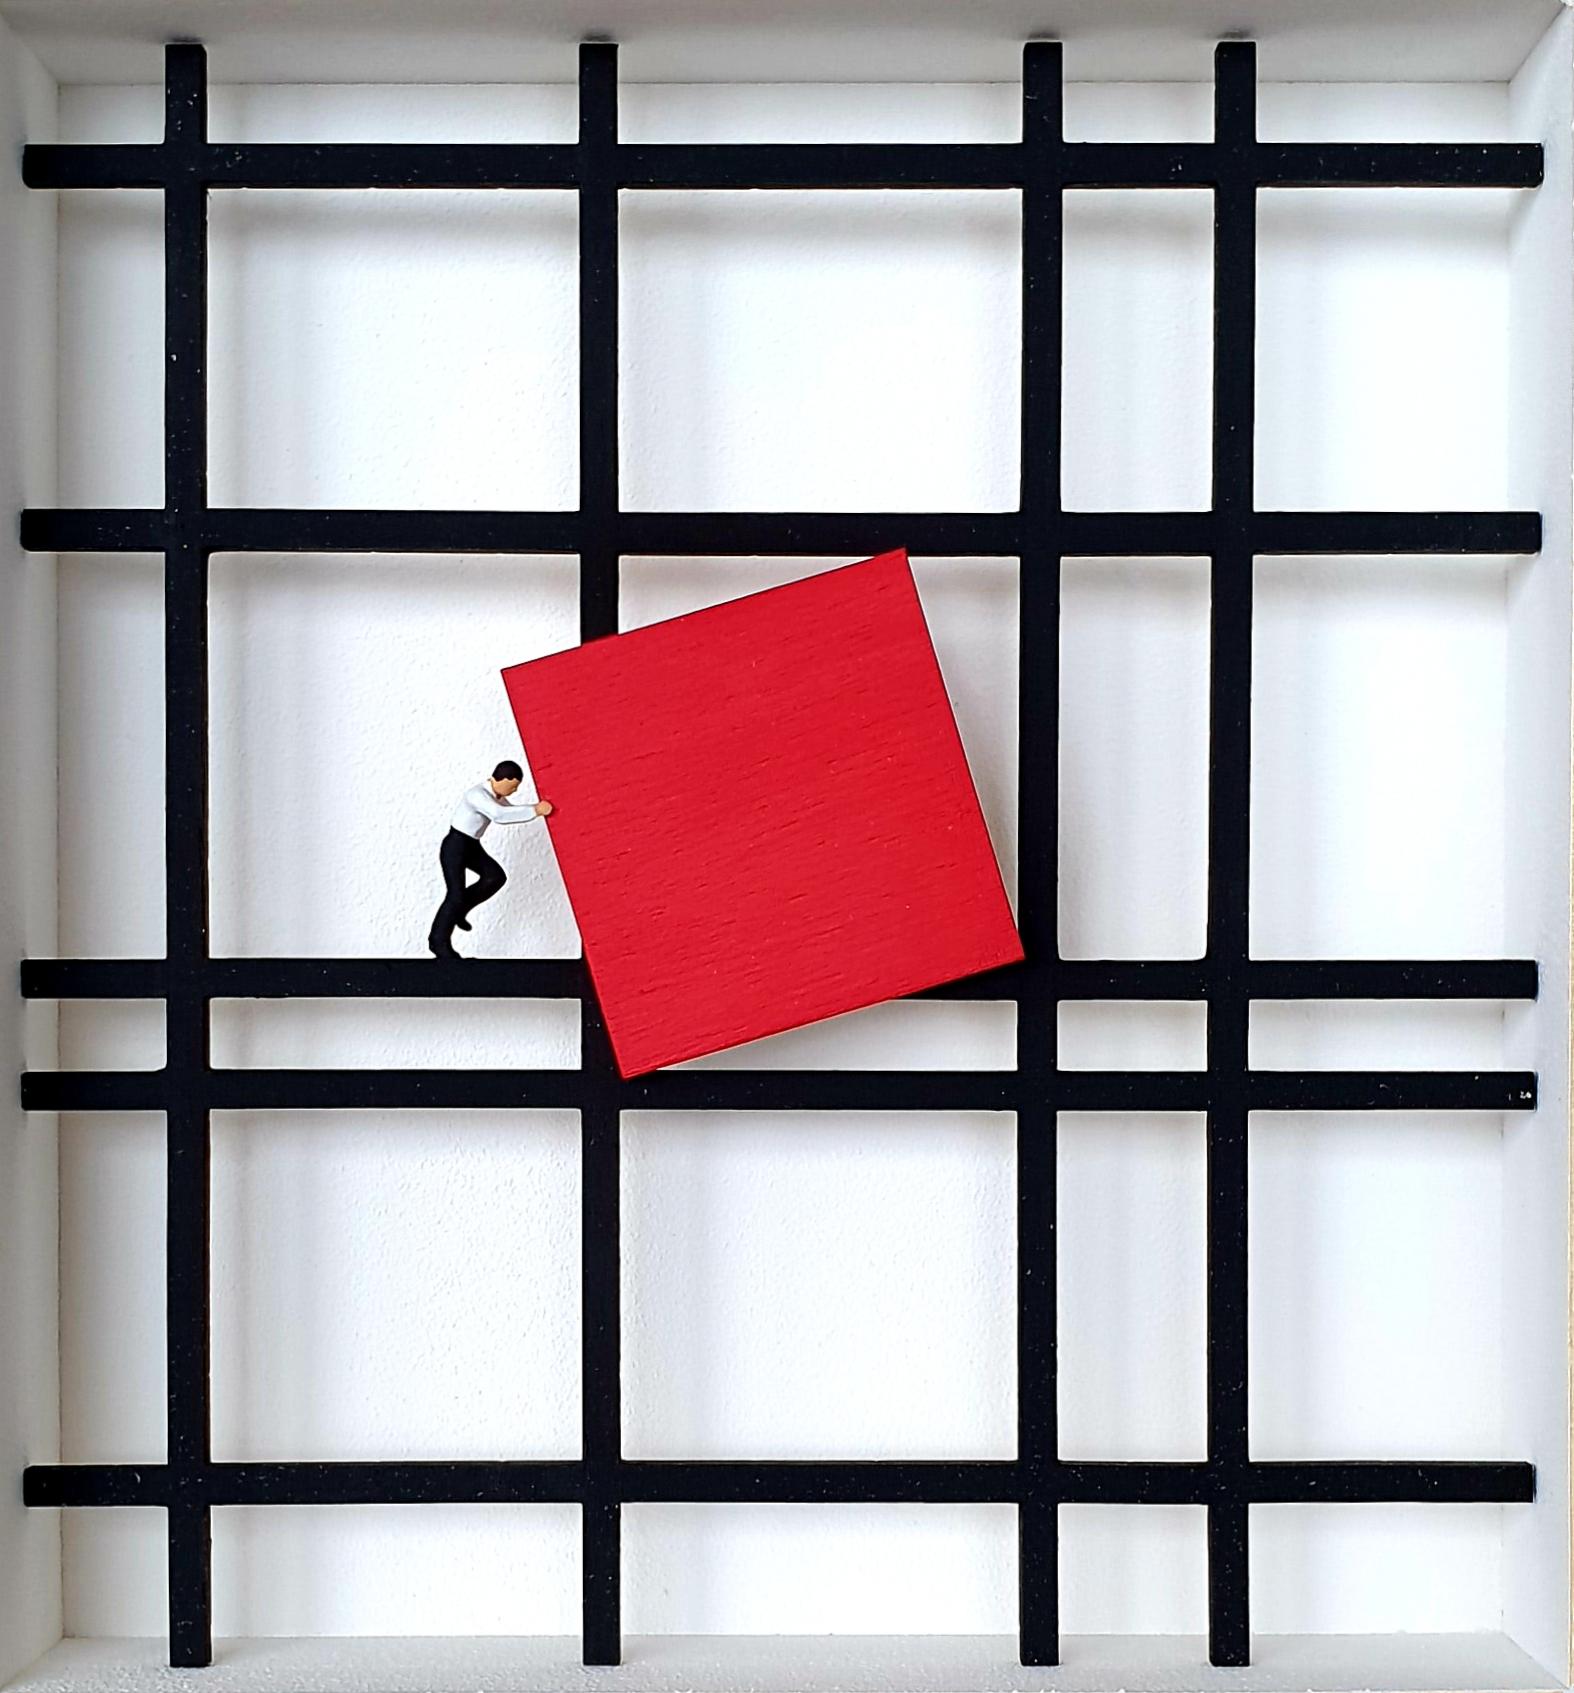 Homage to Mondrian - Falling, contemporary art work, design tribute Dutch master